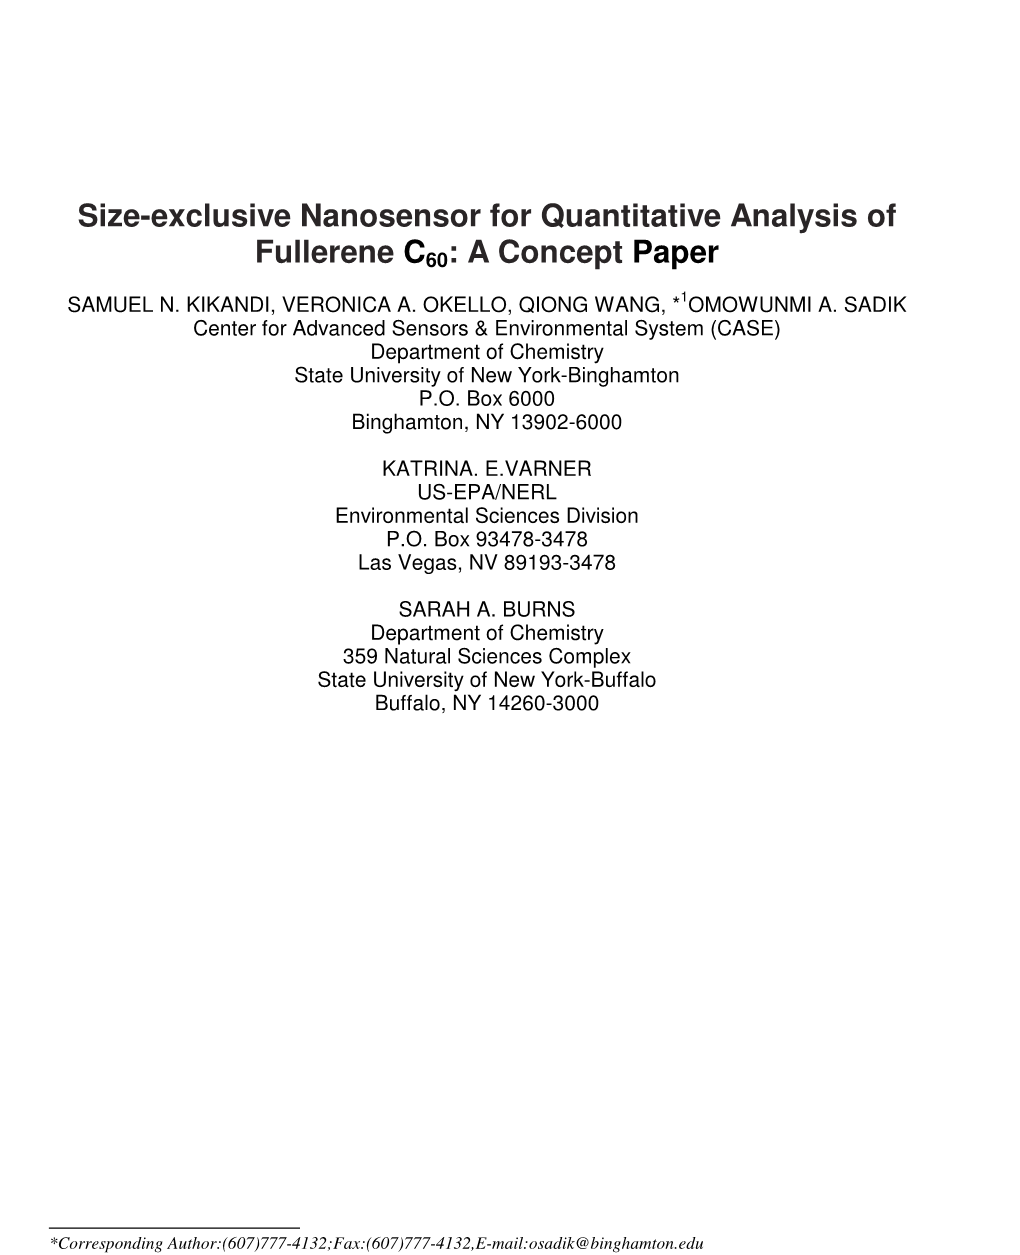 Size-Exclusive Nanosensor for Quantitative Analysis of 11 12 Fullerene C60: a Concept Paper